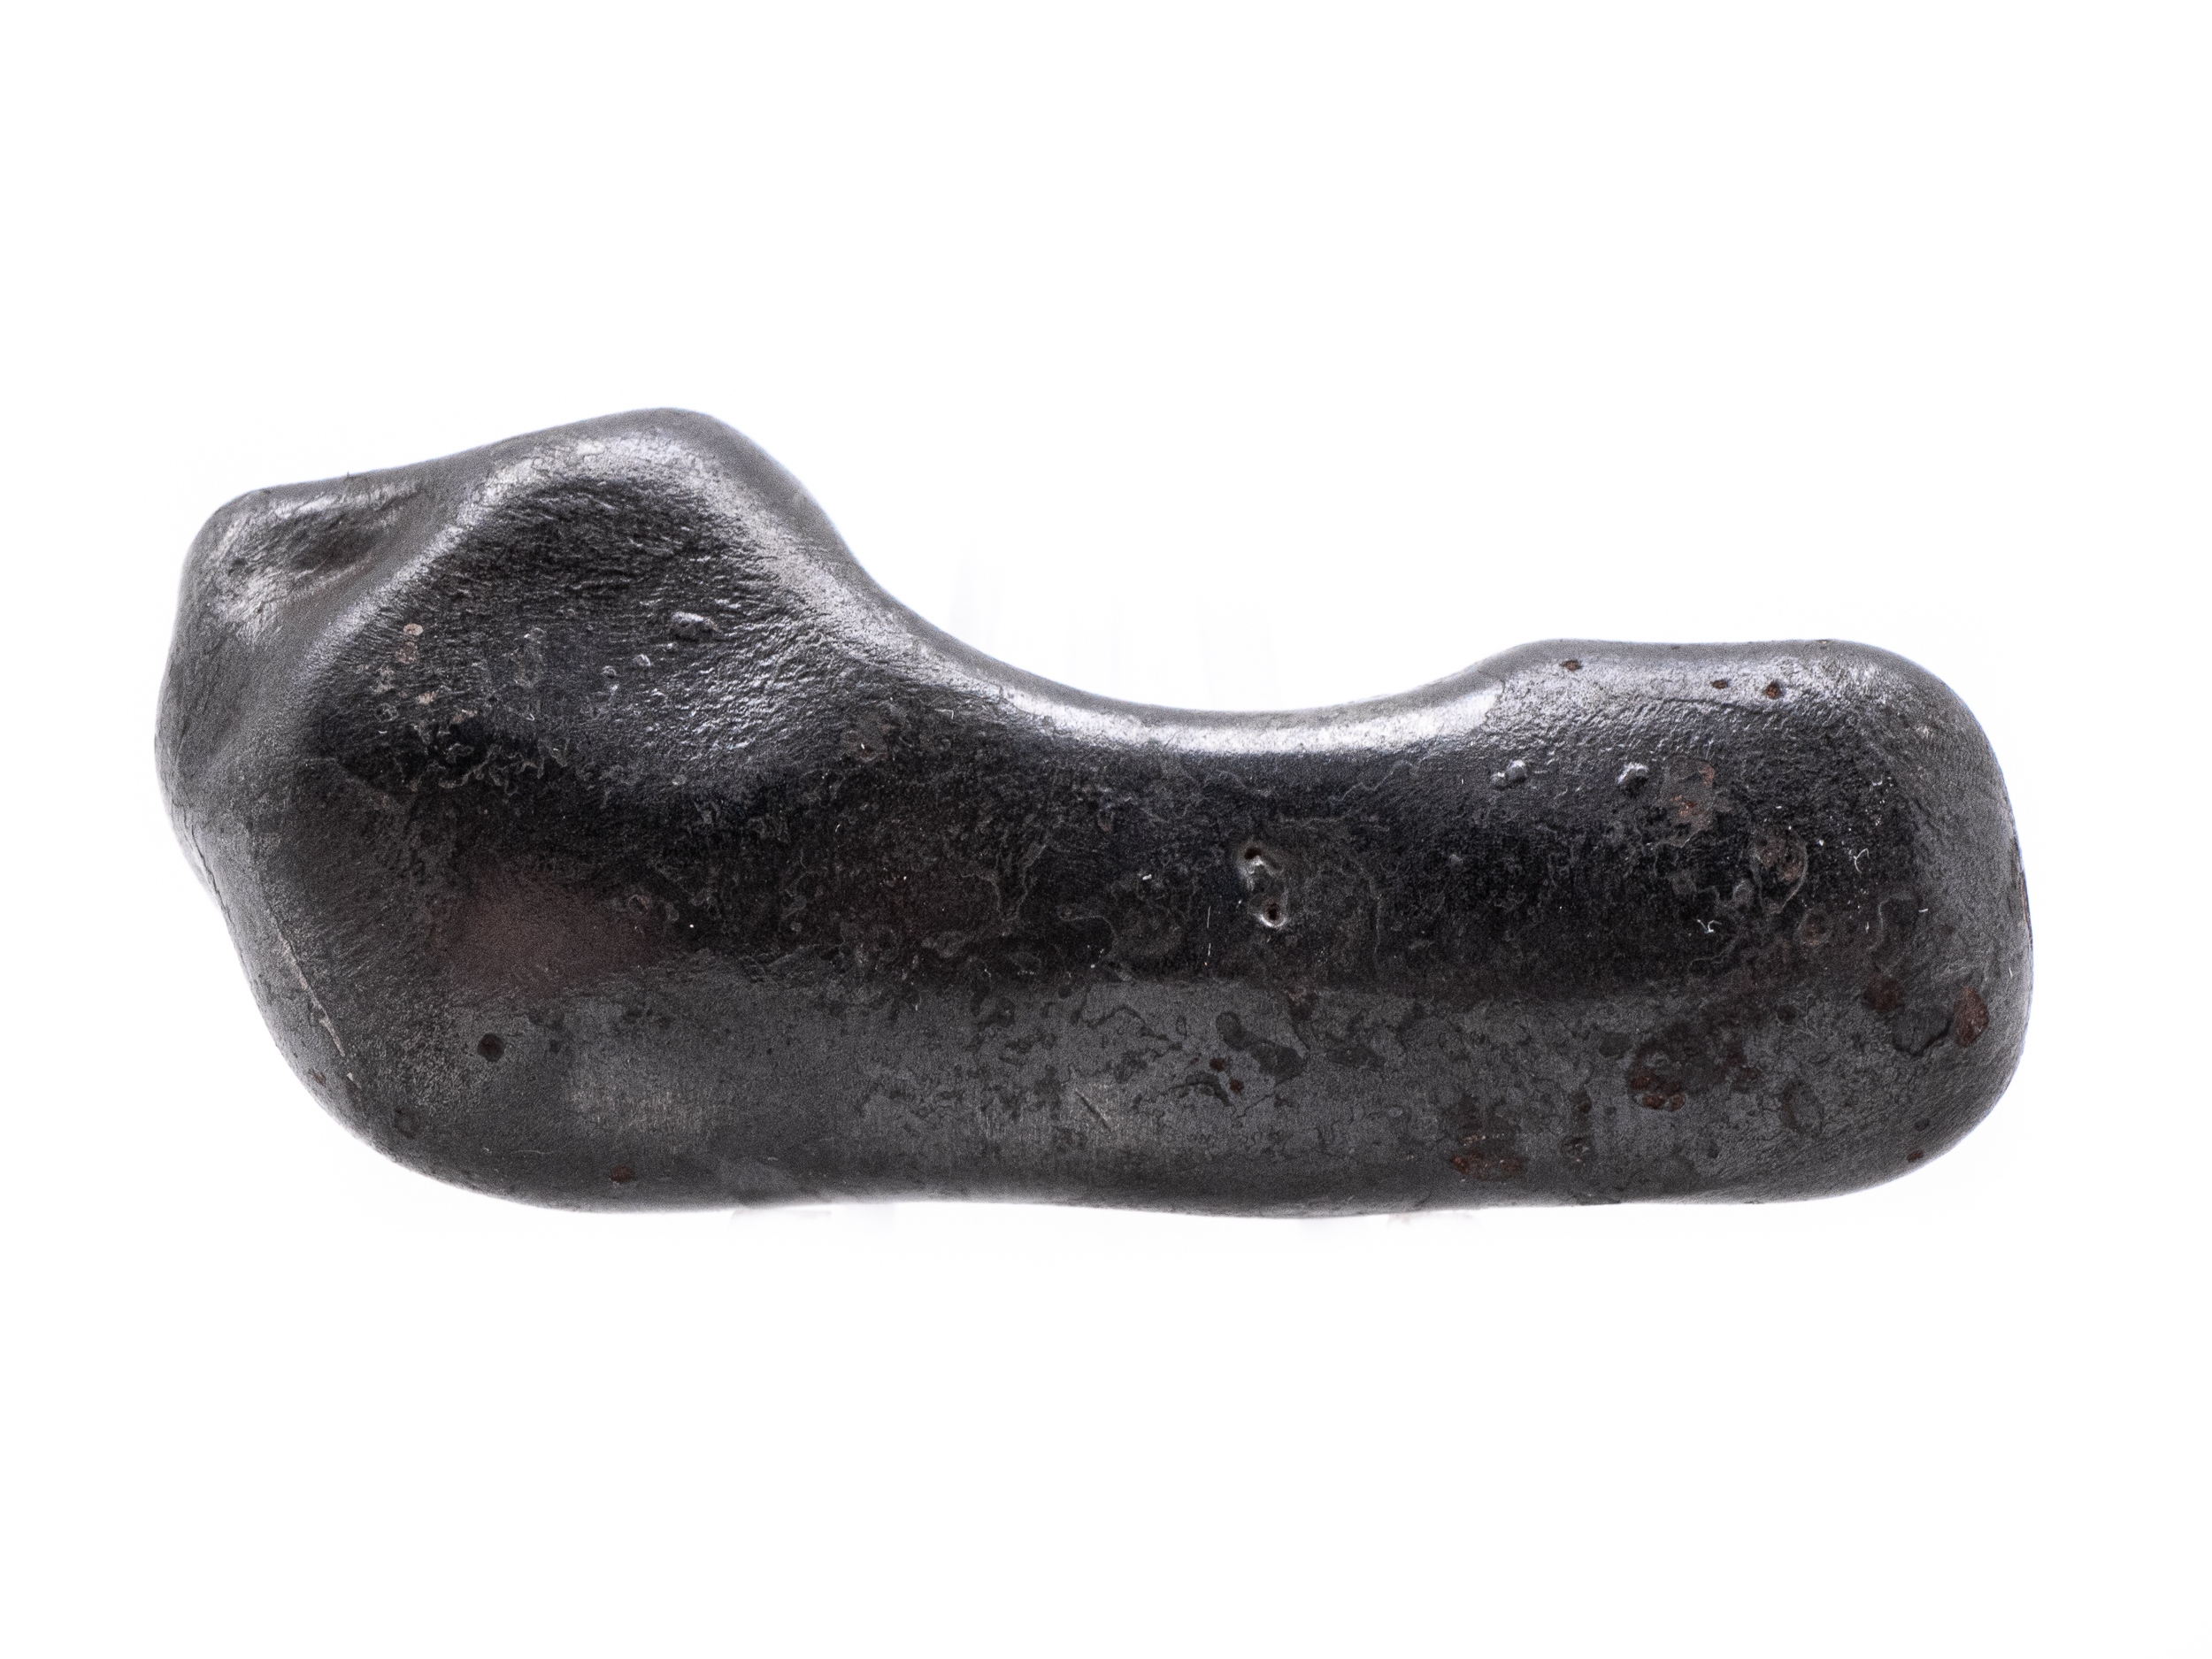 oriented iron meteorite 77